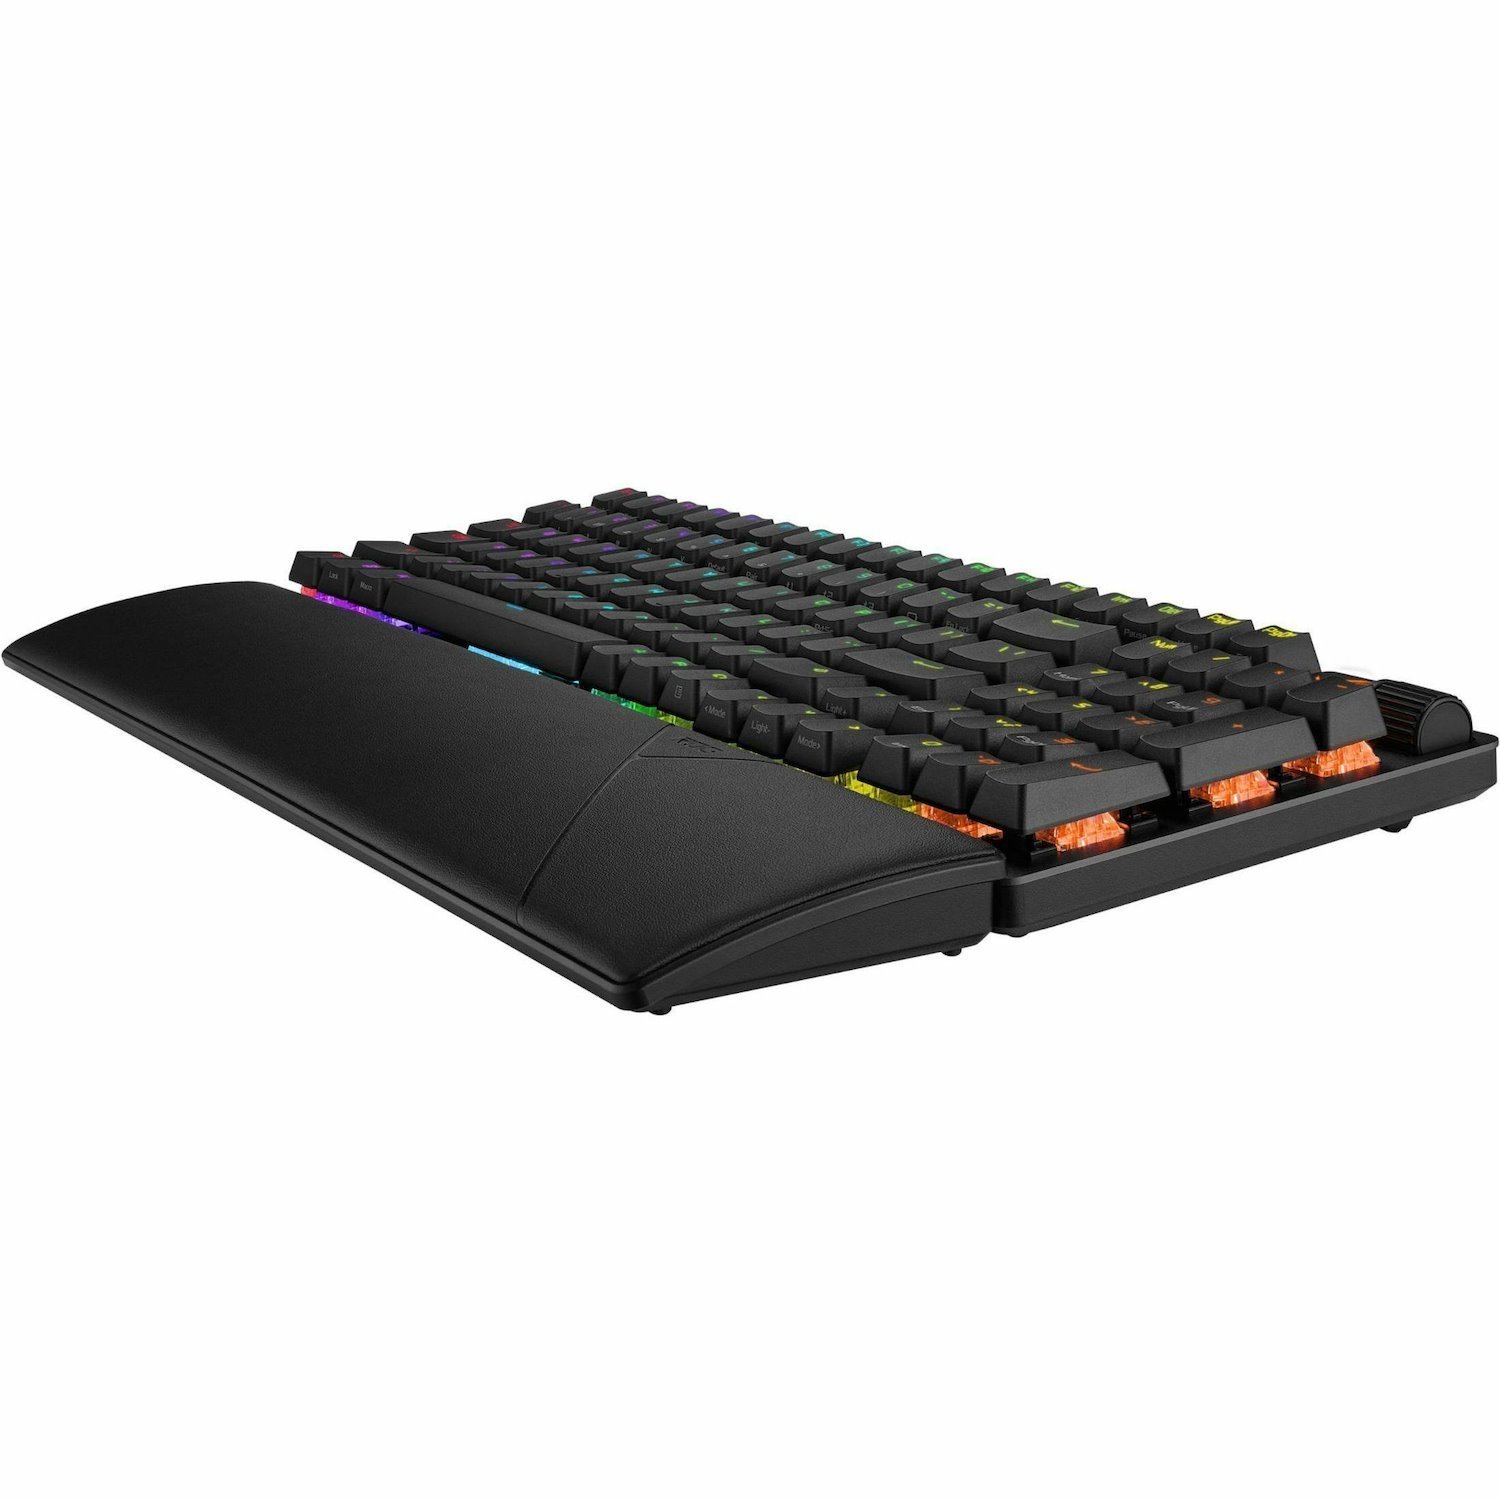 Asus ROG Strix Scope II 96 Wireless Gaming Keyboard